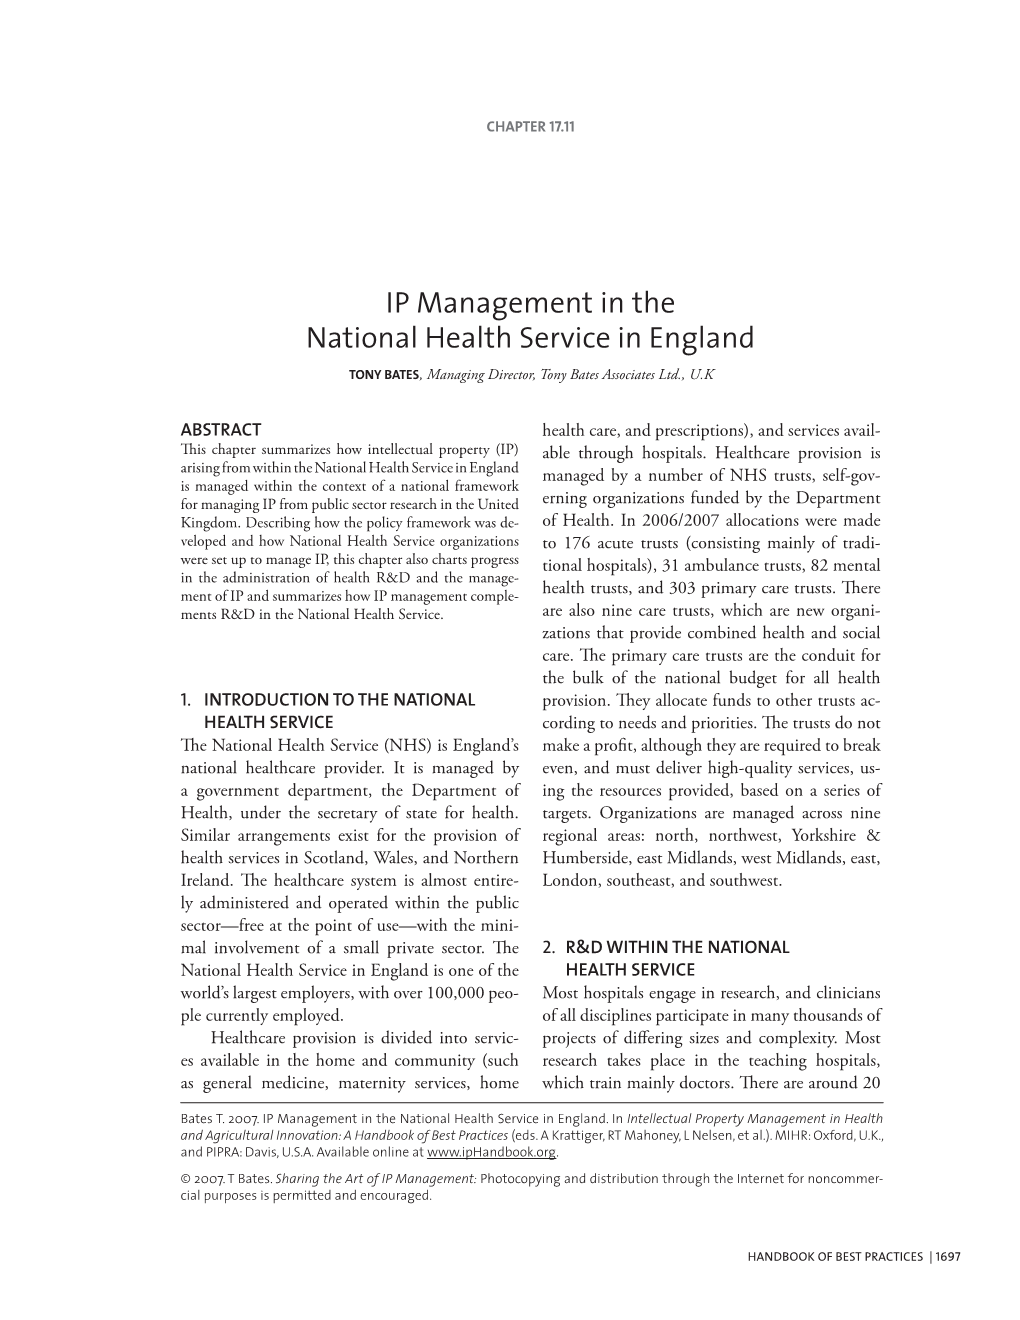 IP Management in the National Health Service in England Tony Bates, Managing Director, Tony Bates Associates Ltd., U.K